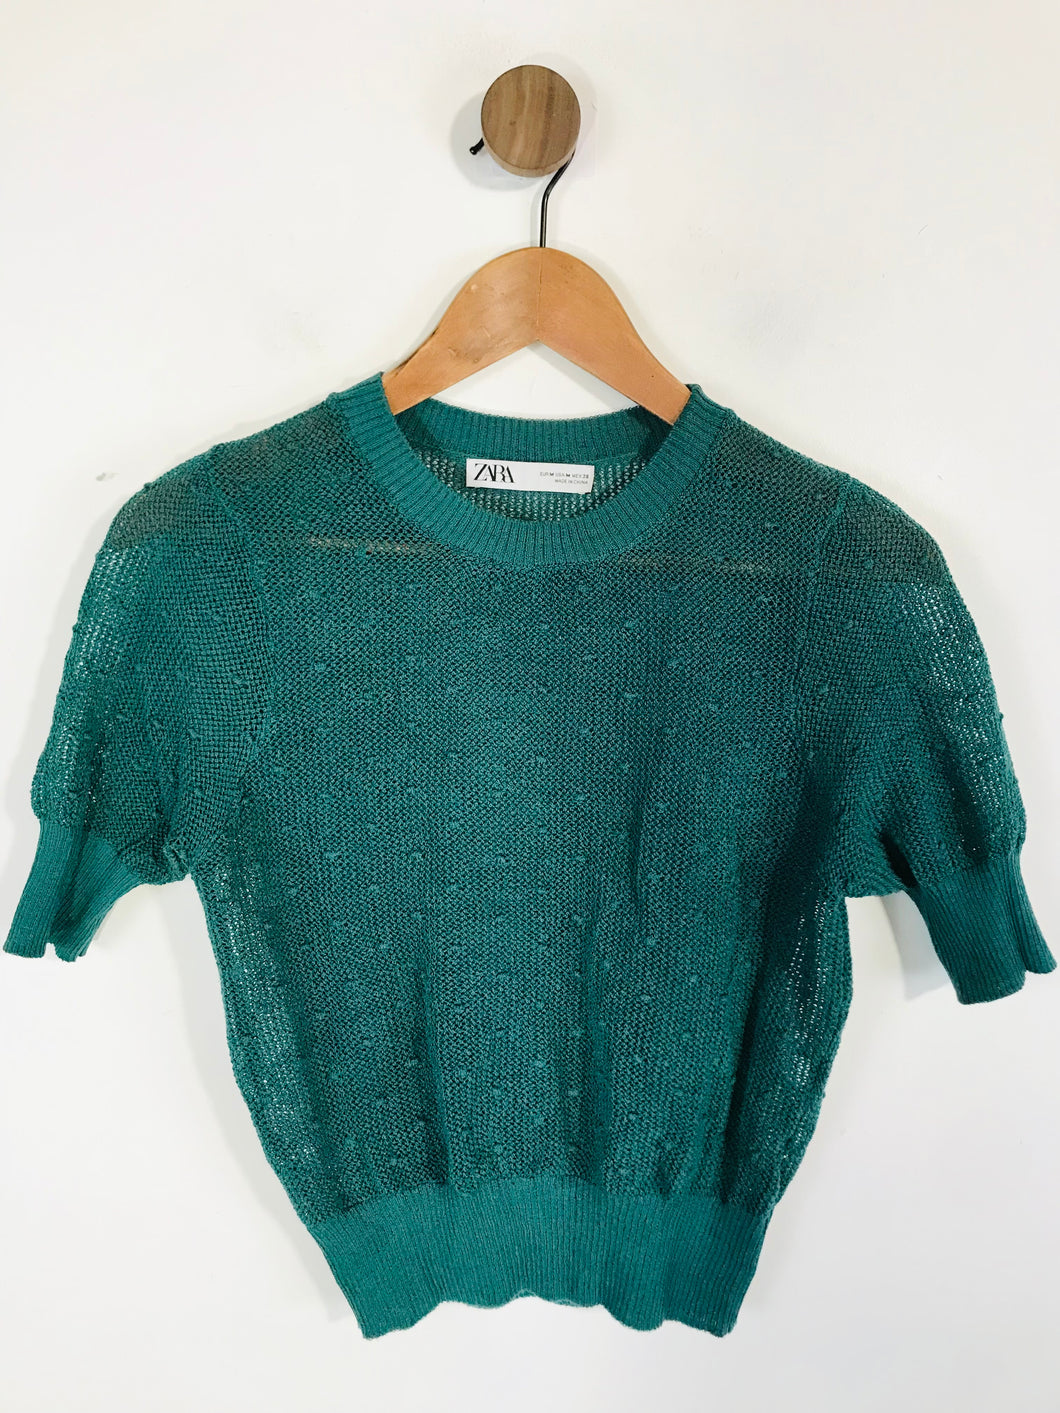 Zara Women's Crop Knit T-Shirt | M UK10-12 | Green